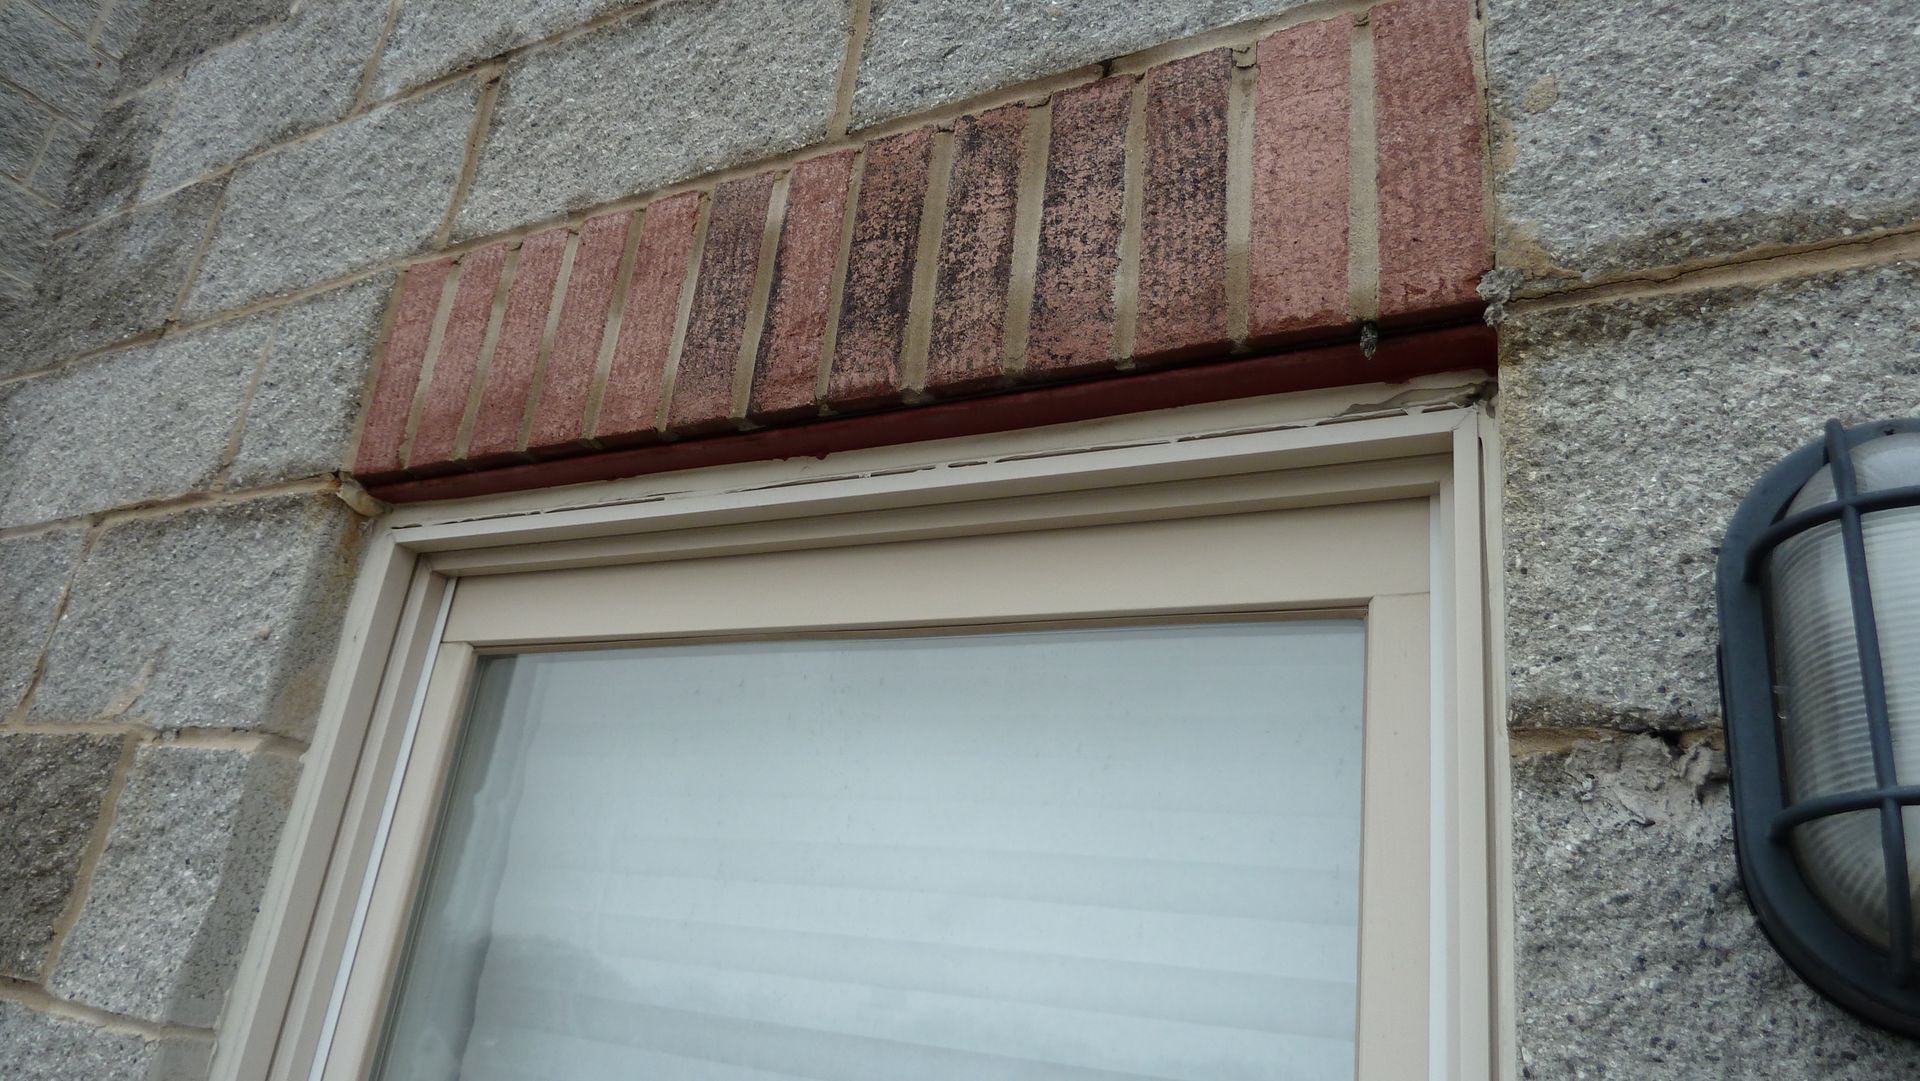 Brick window header in pattern called soldier leaking into window in Wrigleyville, Chicago